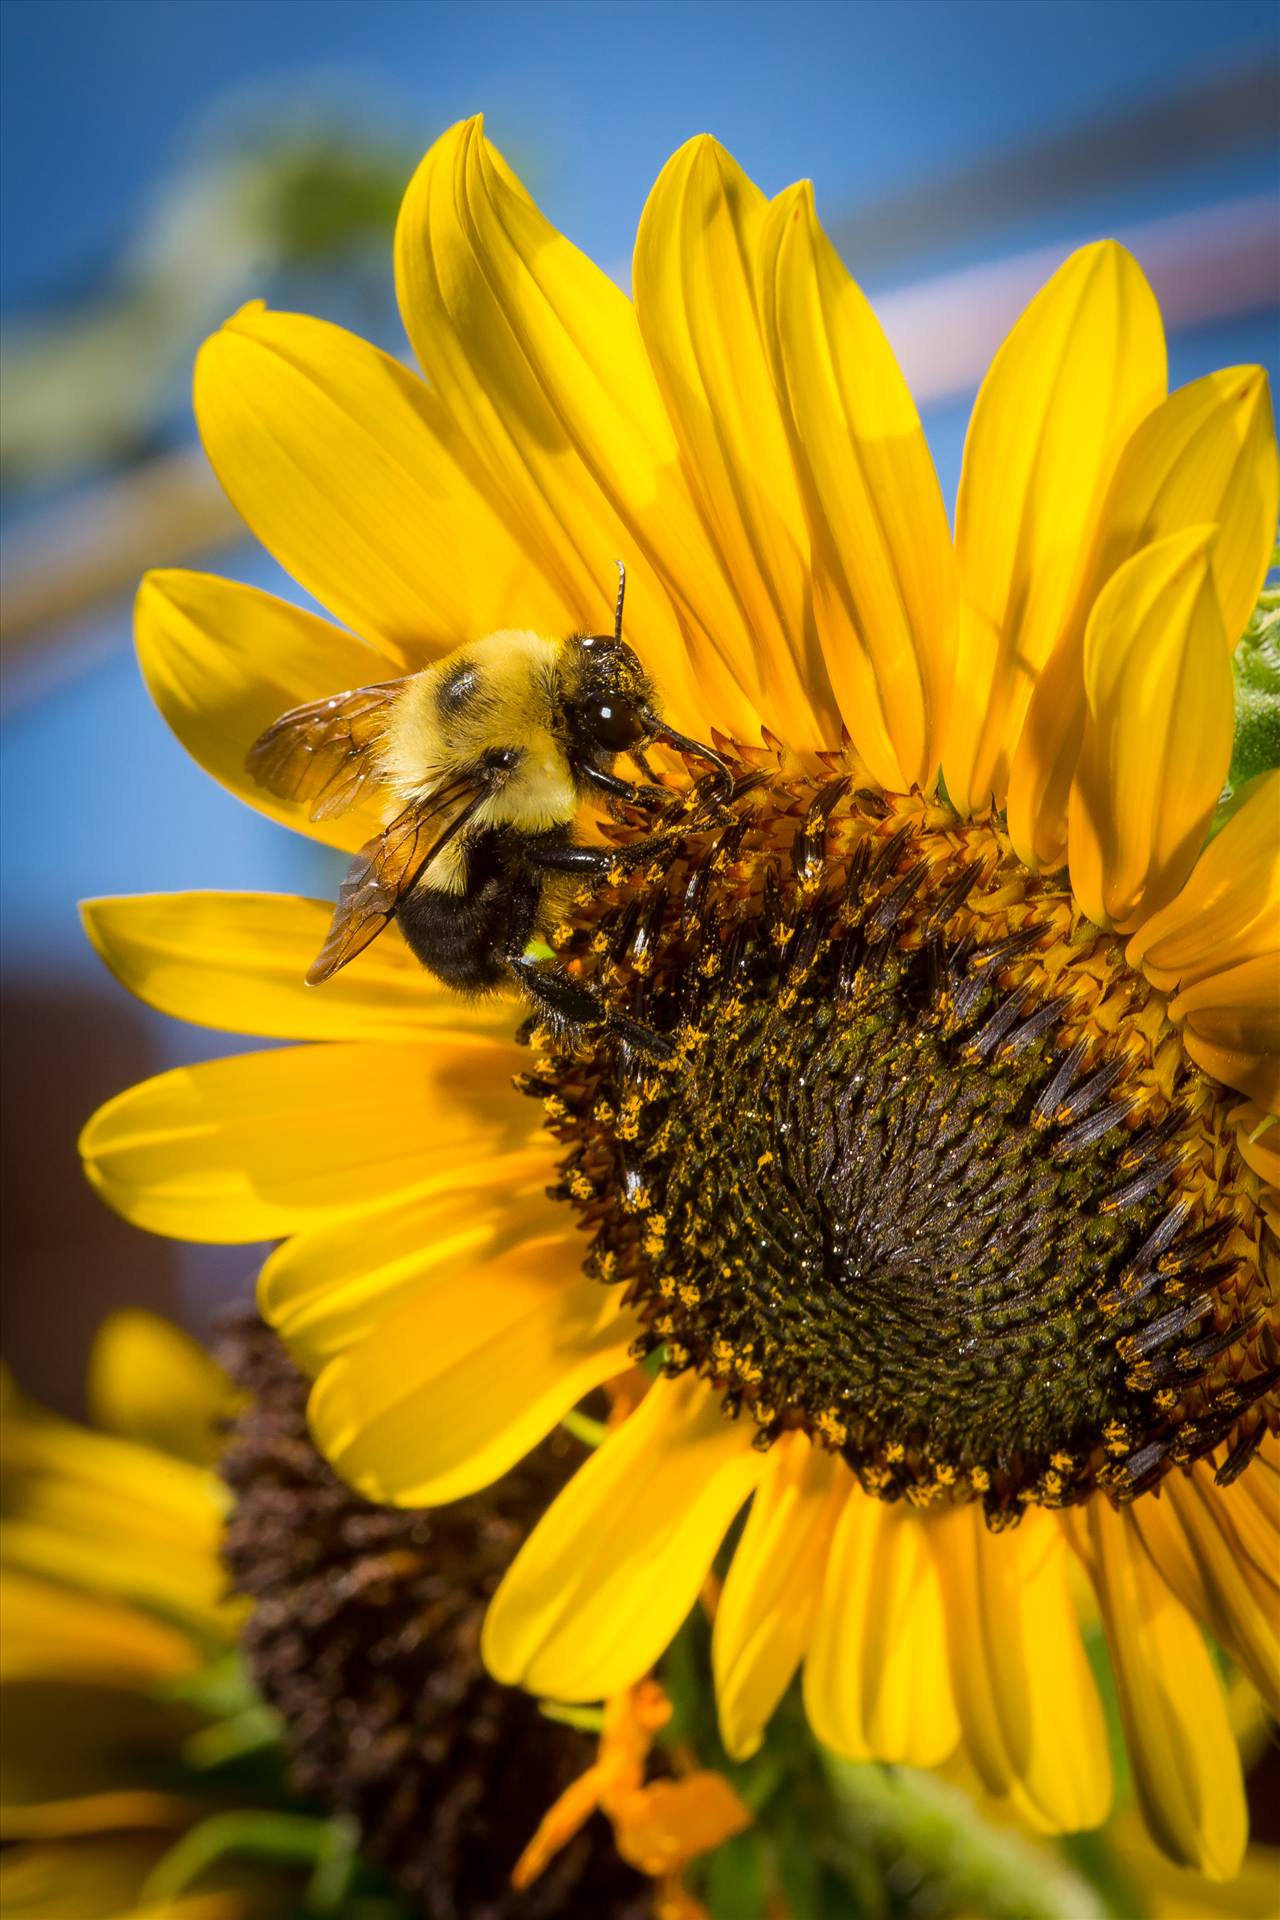 Honeybee Collecting Pollen A honeybee collecting pollen from a sunflower. by Scott Smith Photos